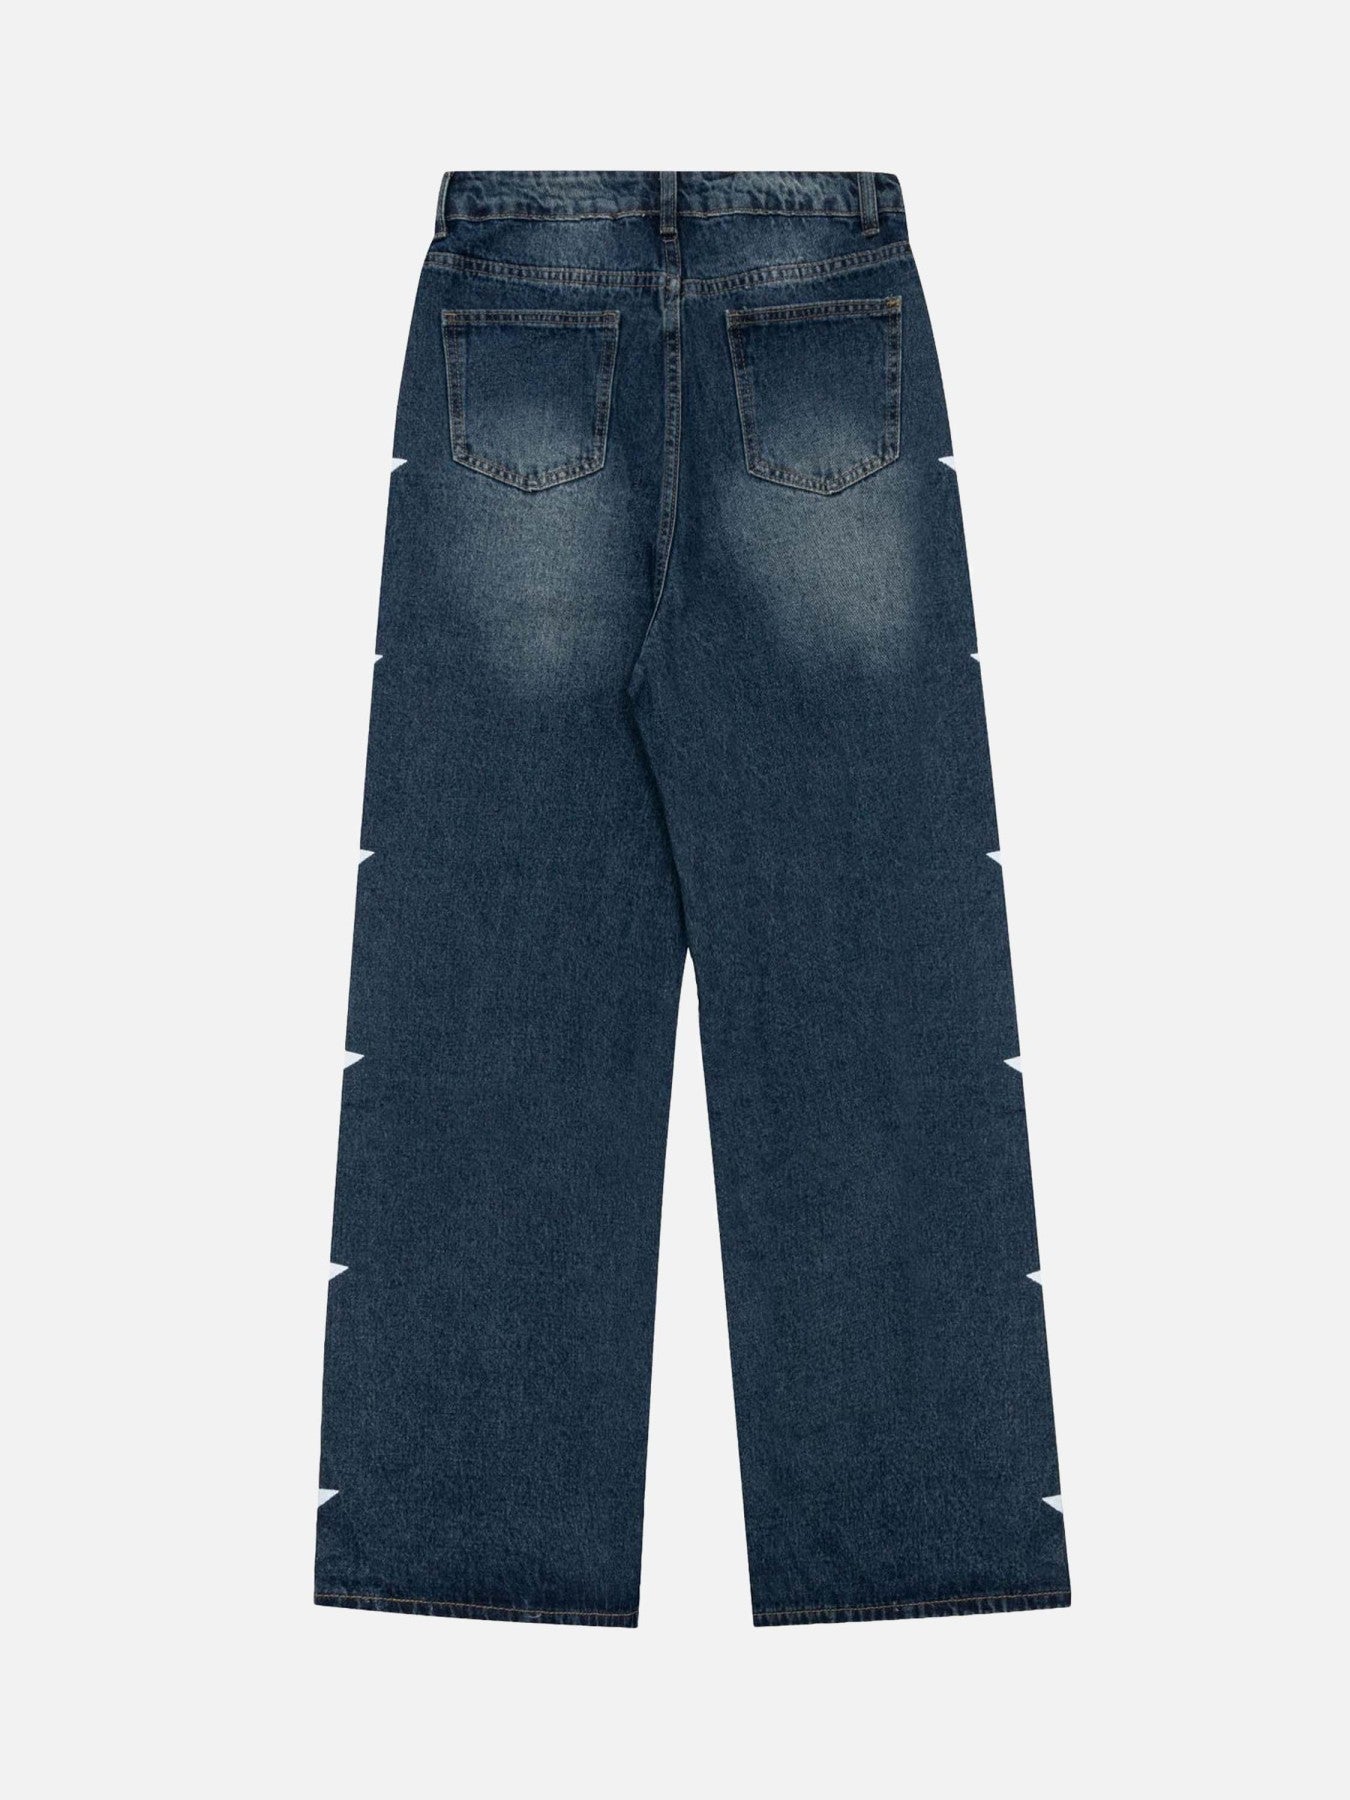 Thesupermade Vintage Star Denim Pants